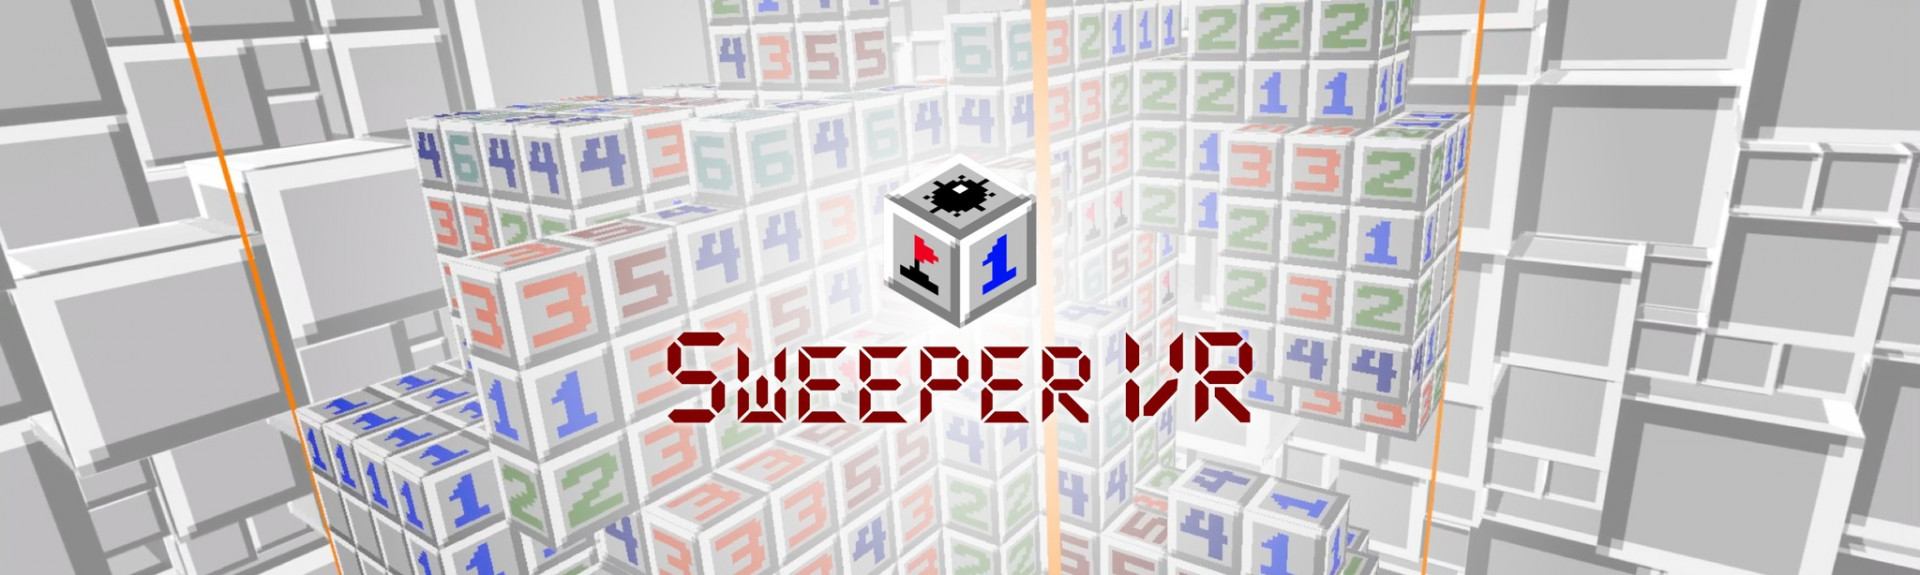 SweeperVR